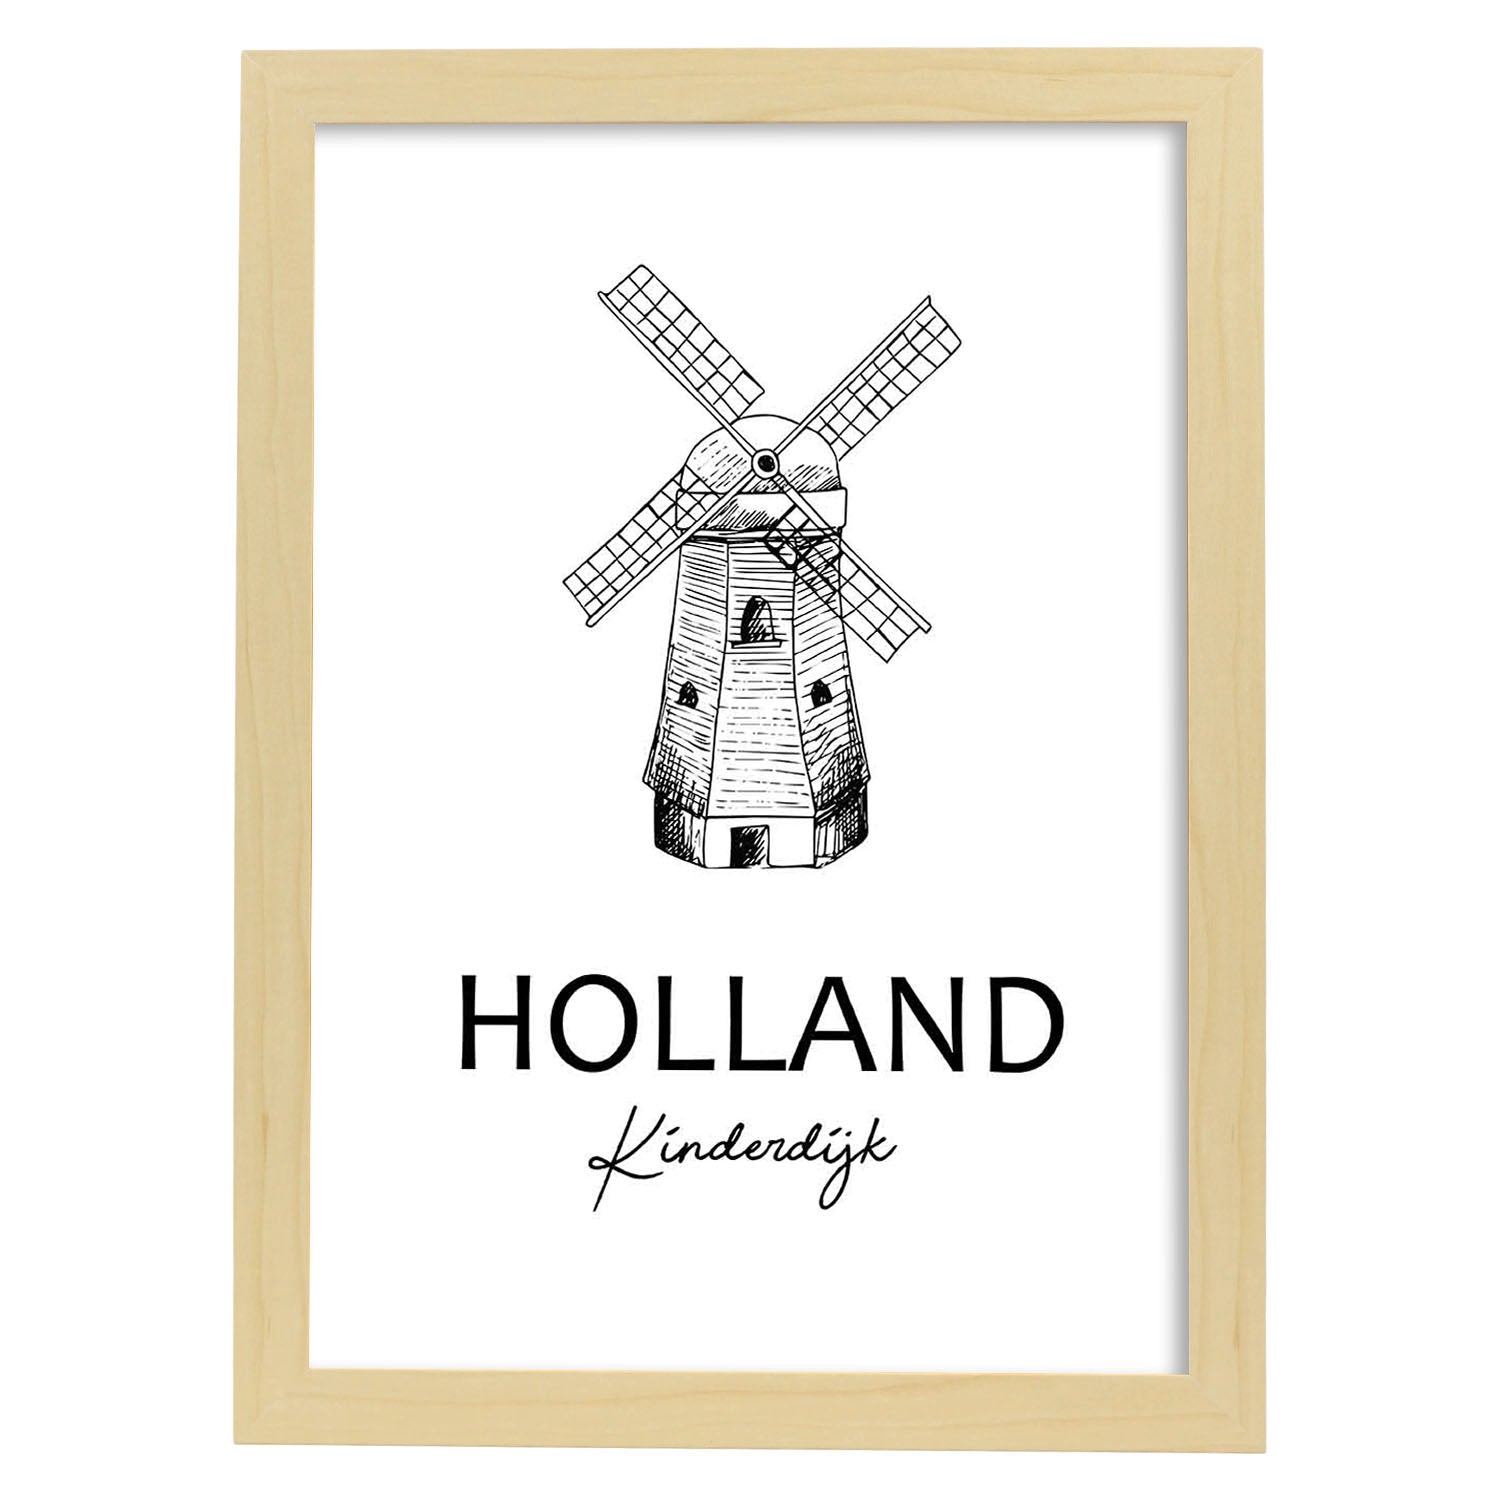 Poster de Holanda - Kinderdijk. Láminas con monumentos de ciudades.-Artwork-Nacnic-A3-Marco Madera clara-Nacnic Estudio SL